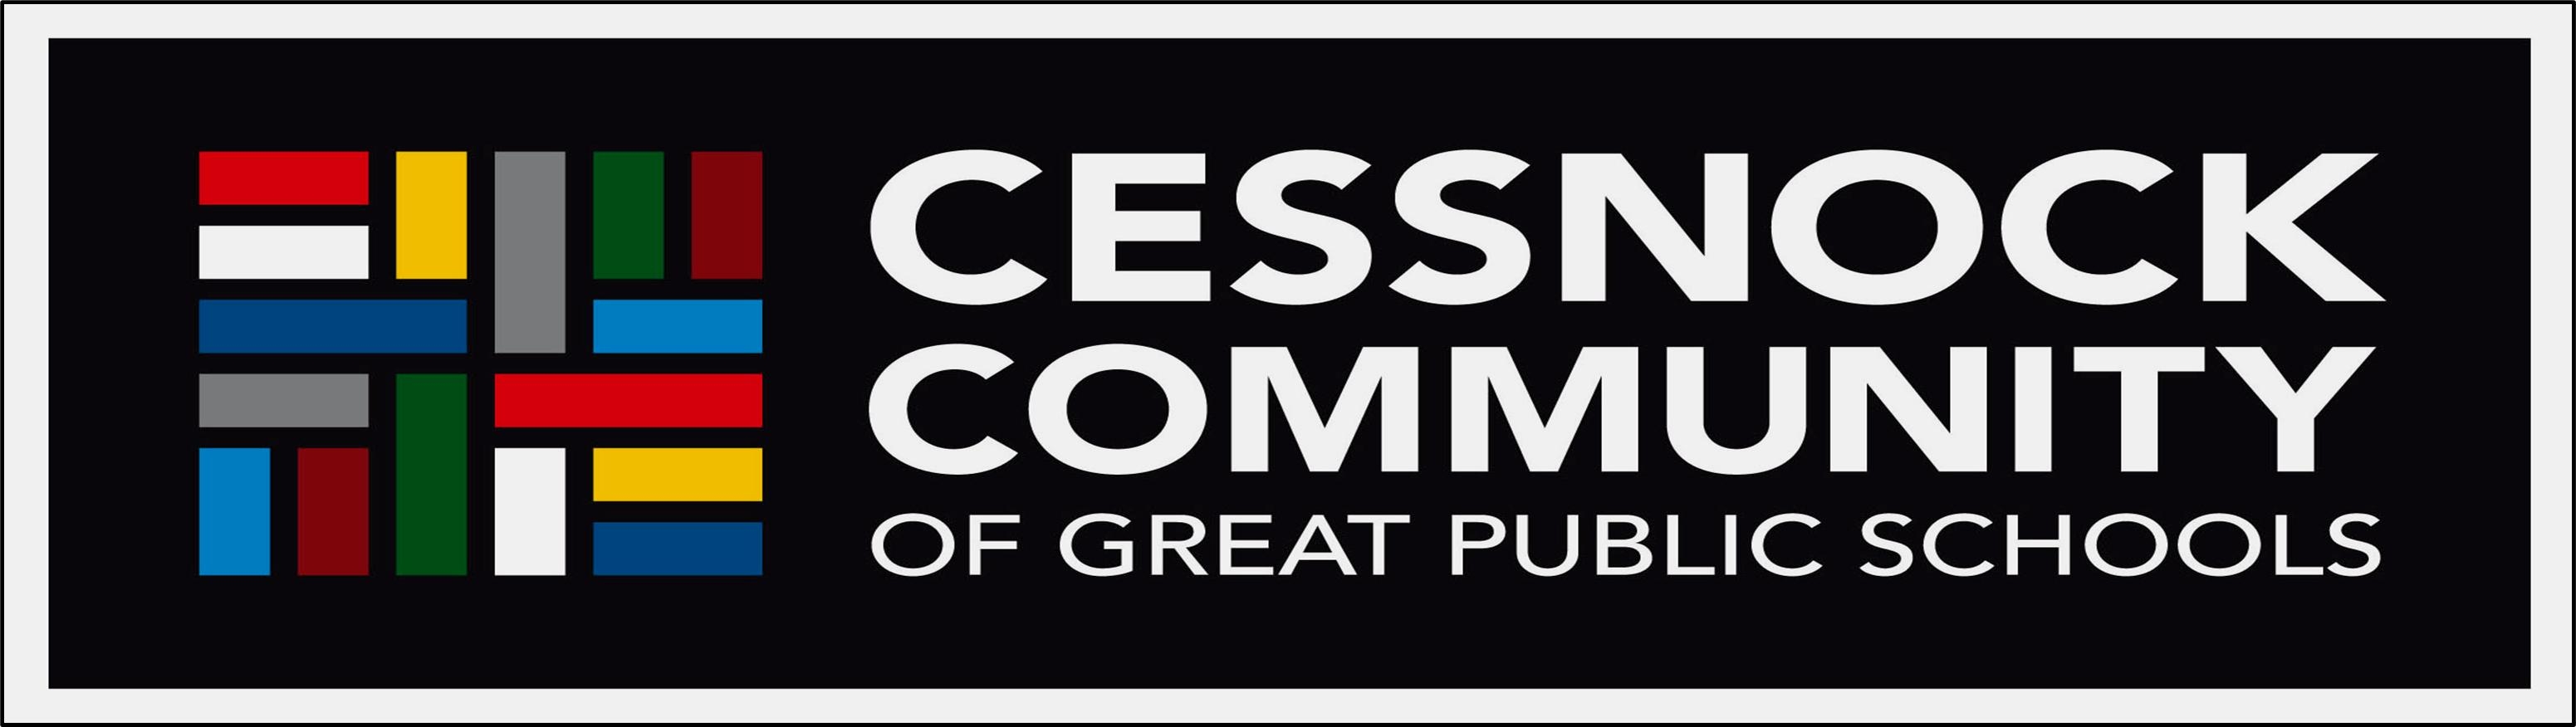 Cessnock Community of Great Public Schools